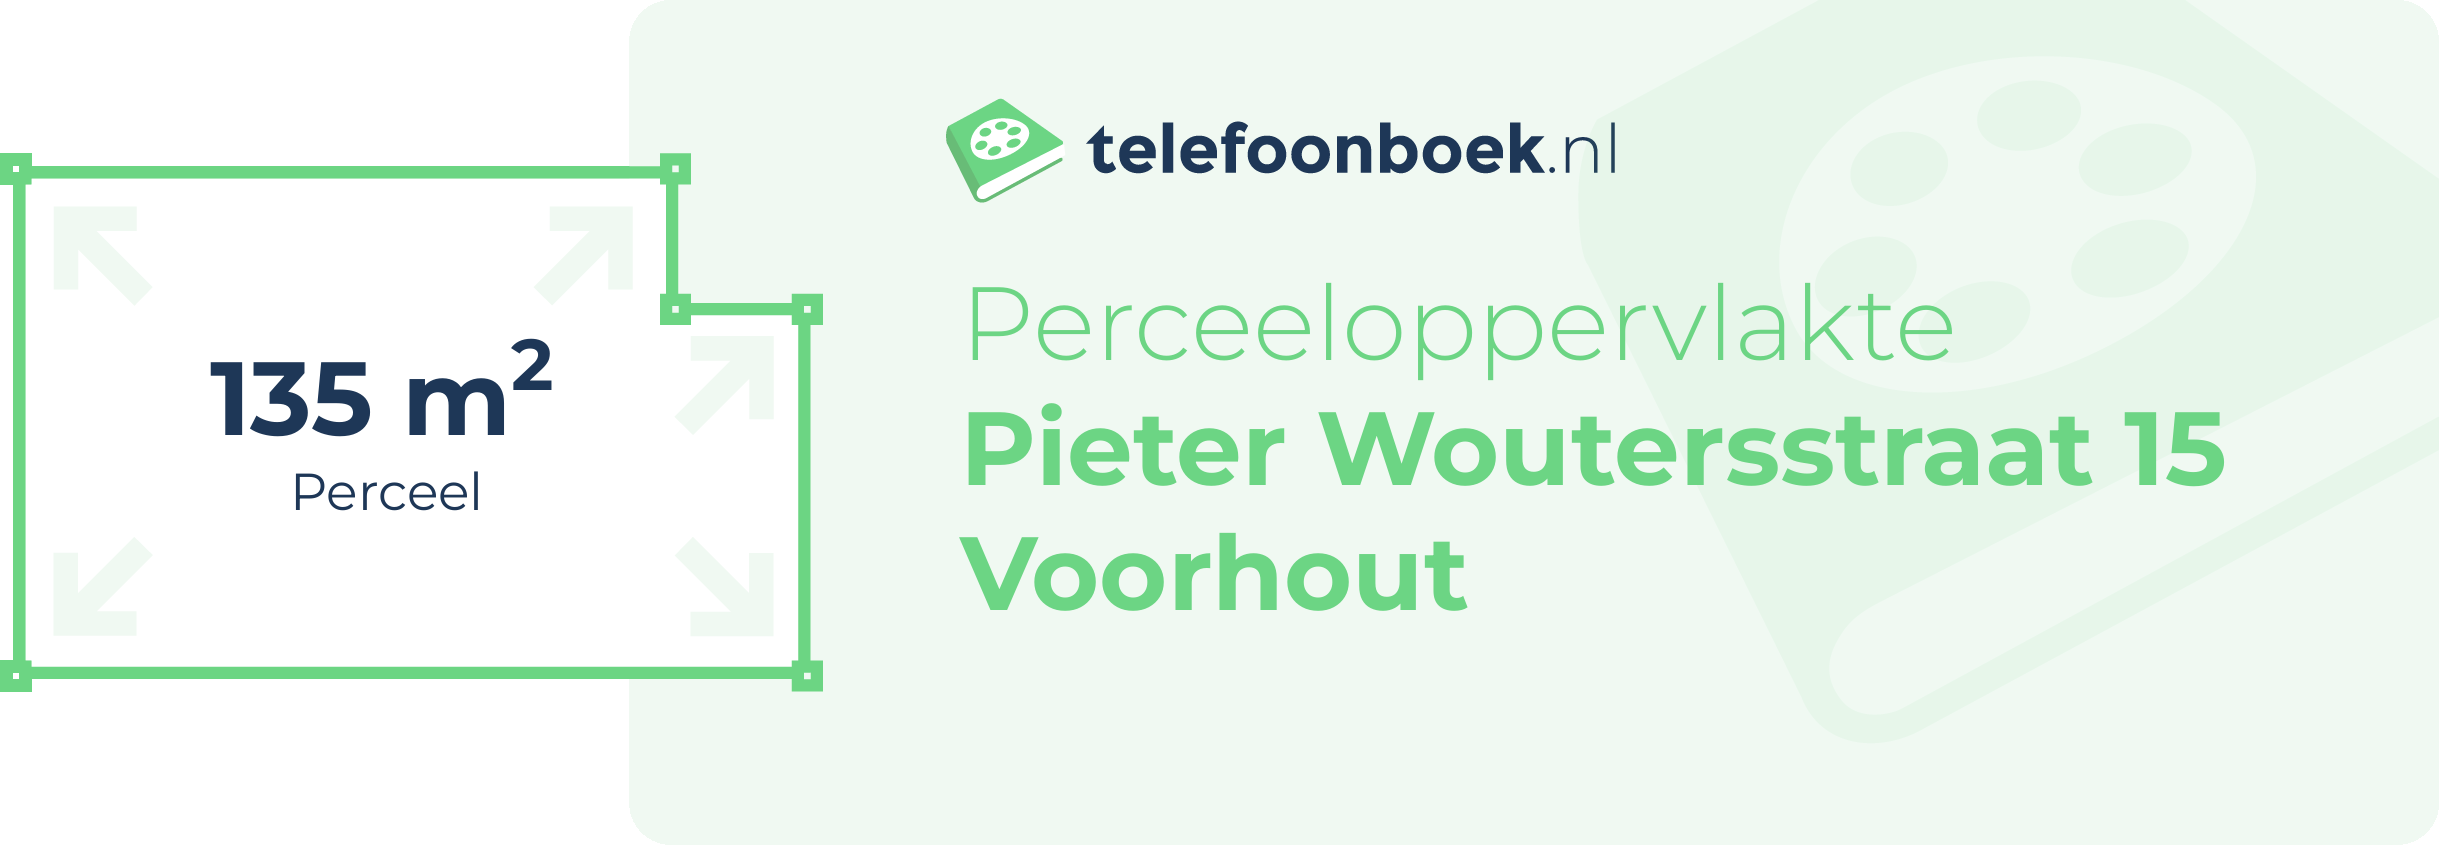 Perceeloppervlakte Pieter Woutersstraat 15 Voorhout